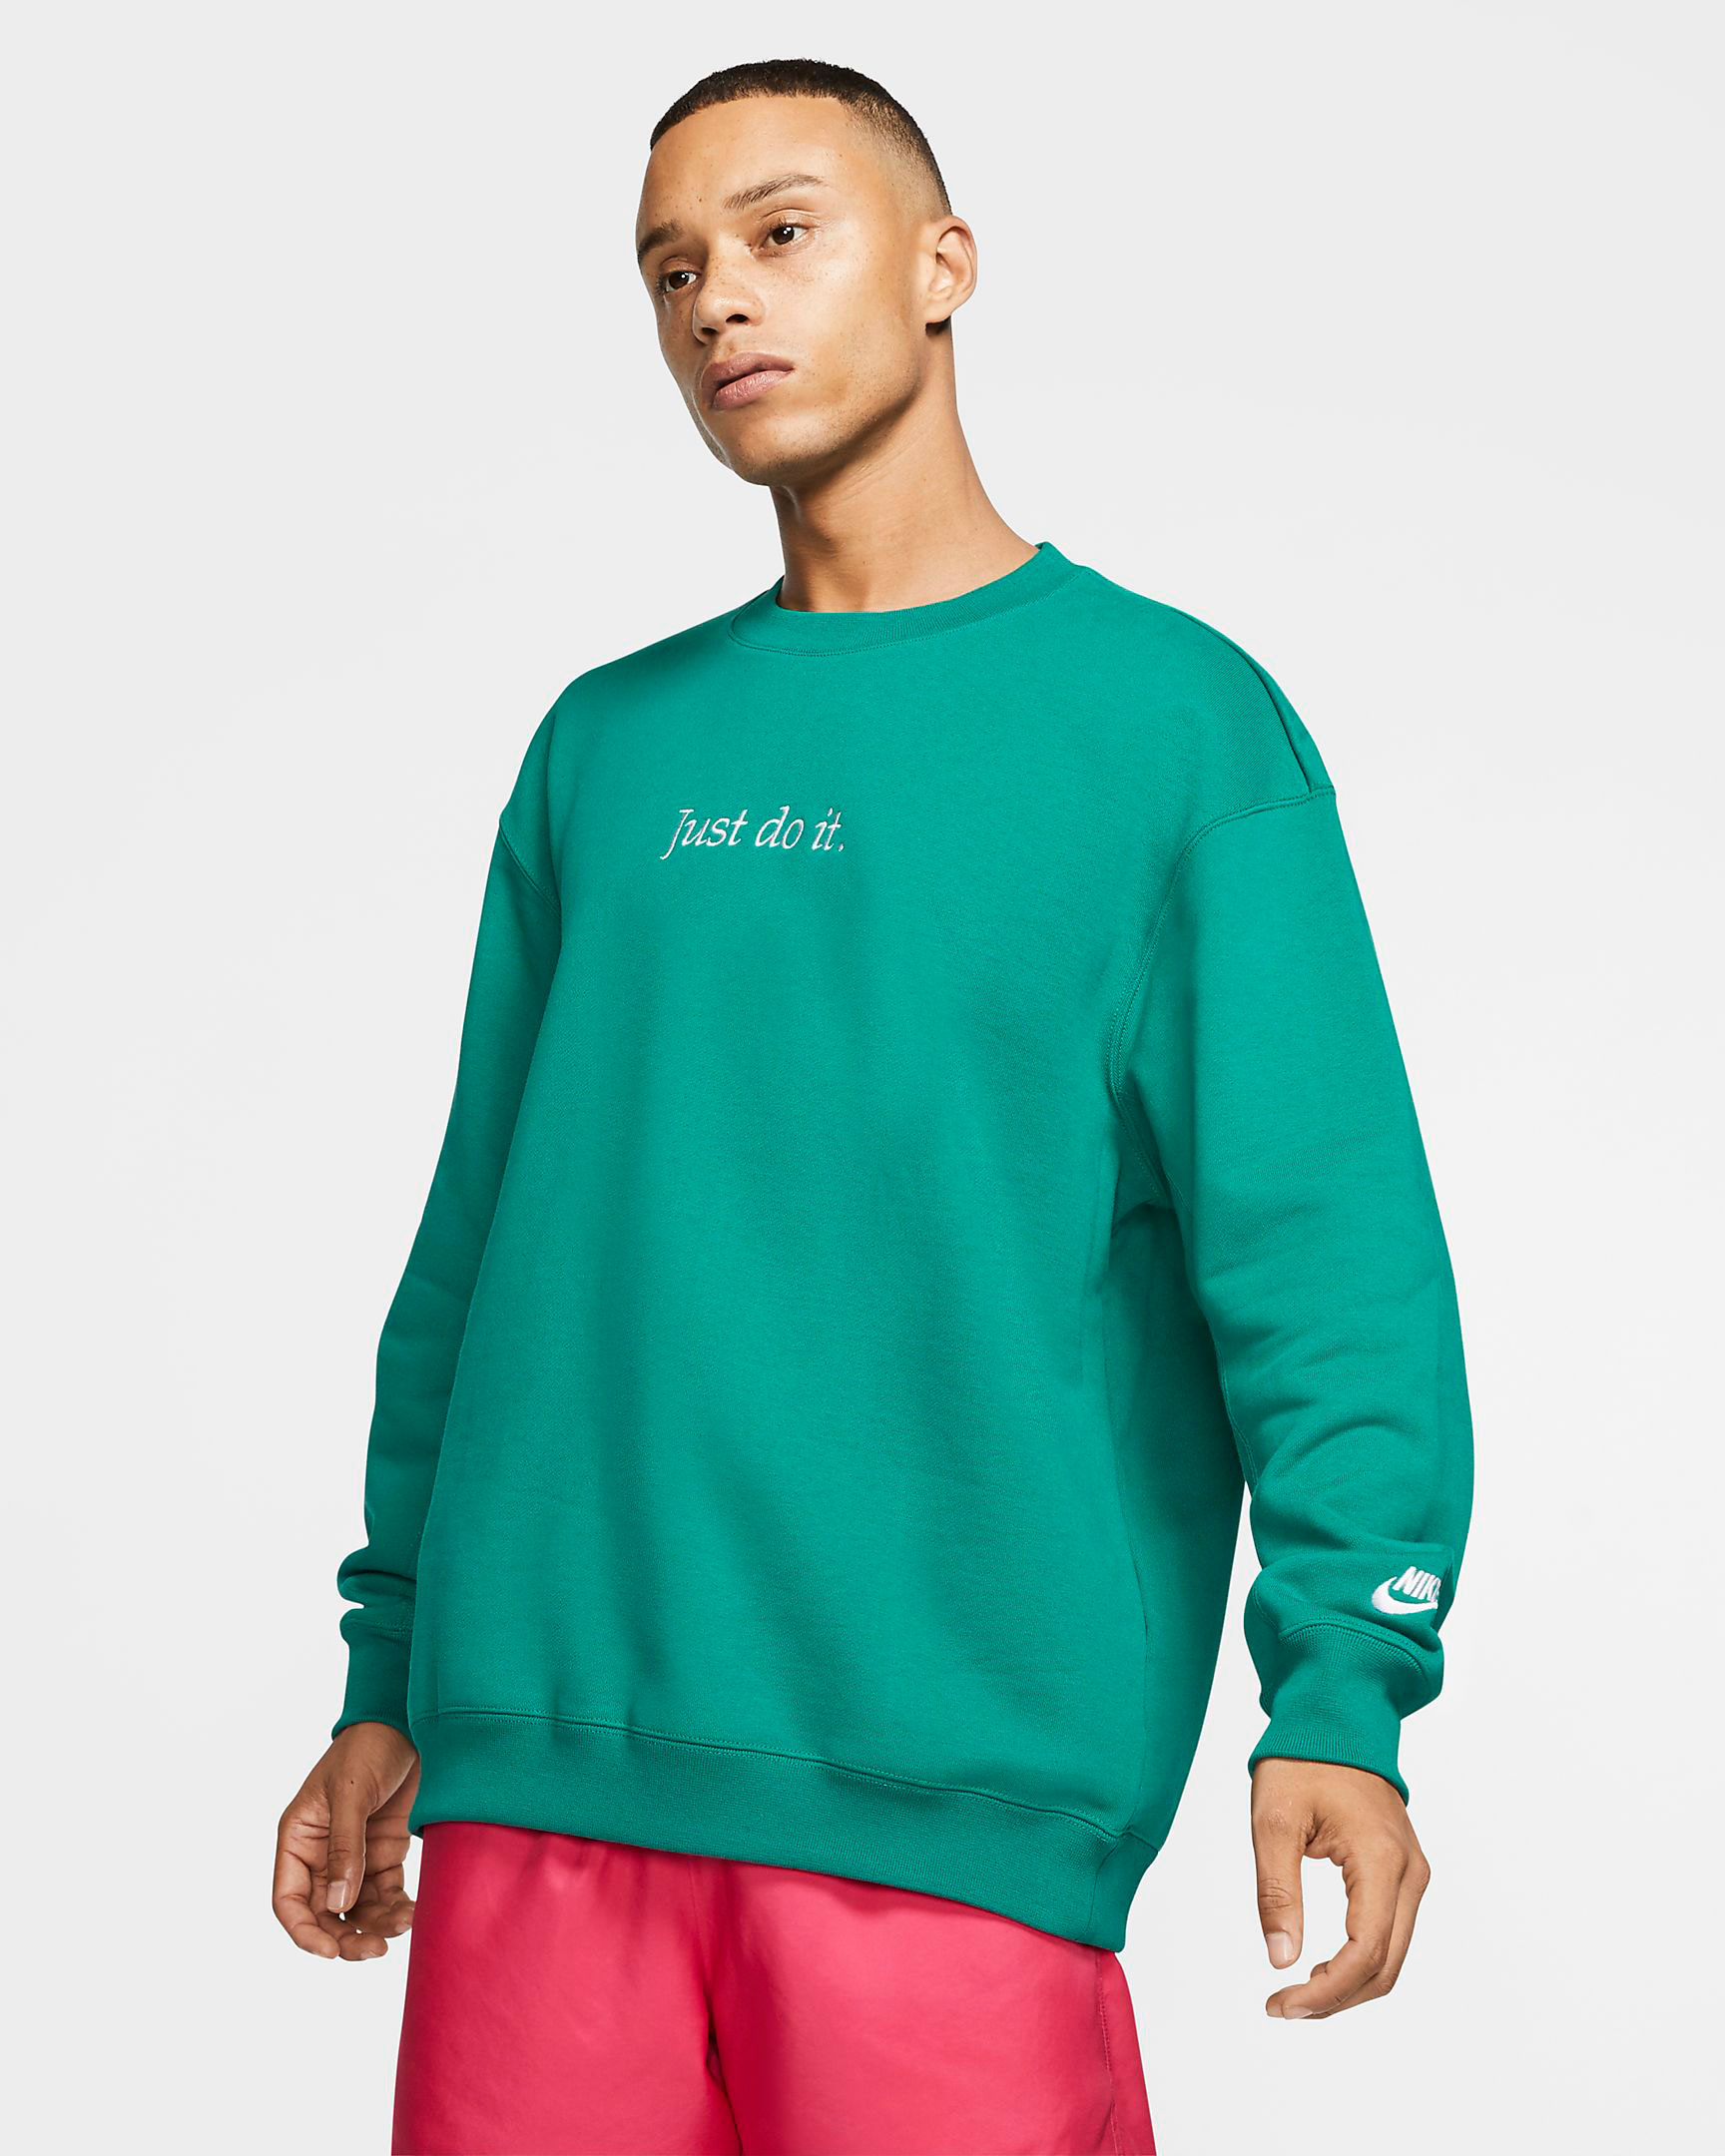 nike-island-green-just-do-it-fleece-crew-sweatshirt